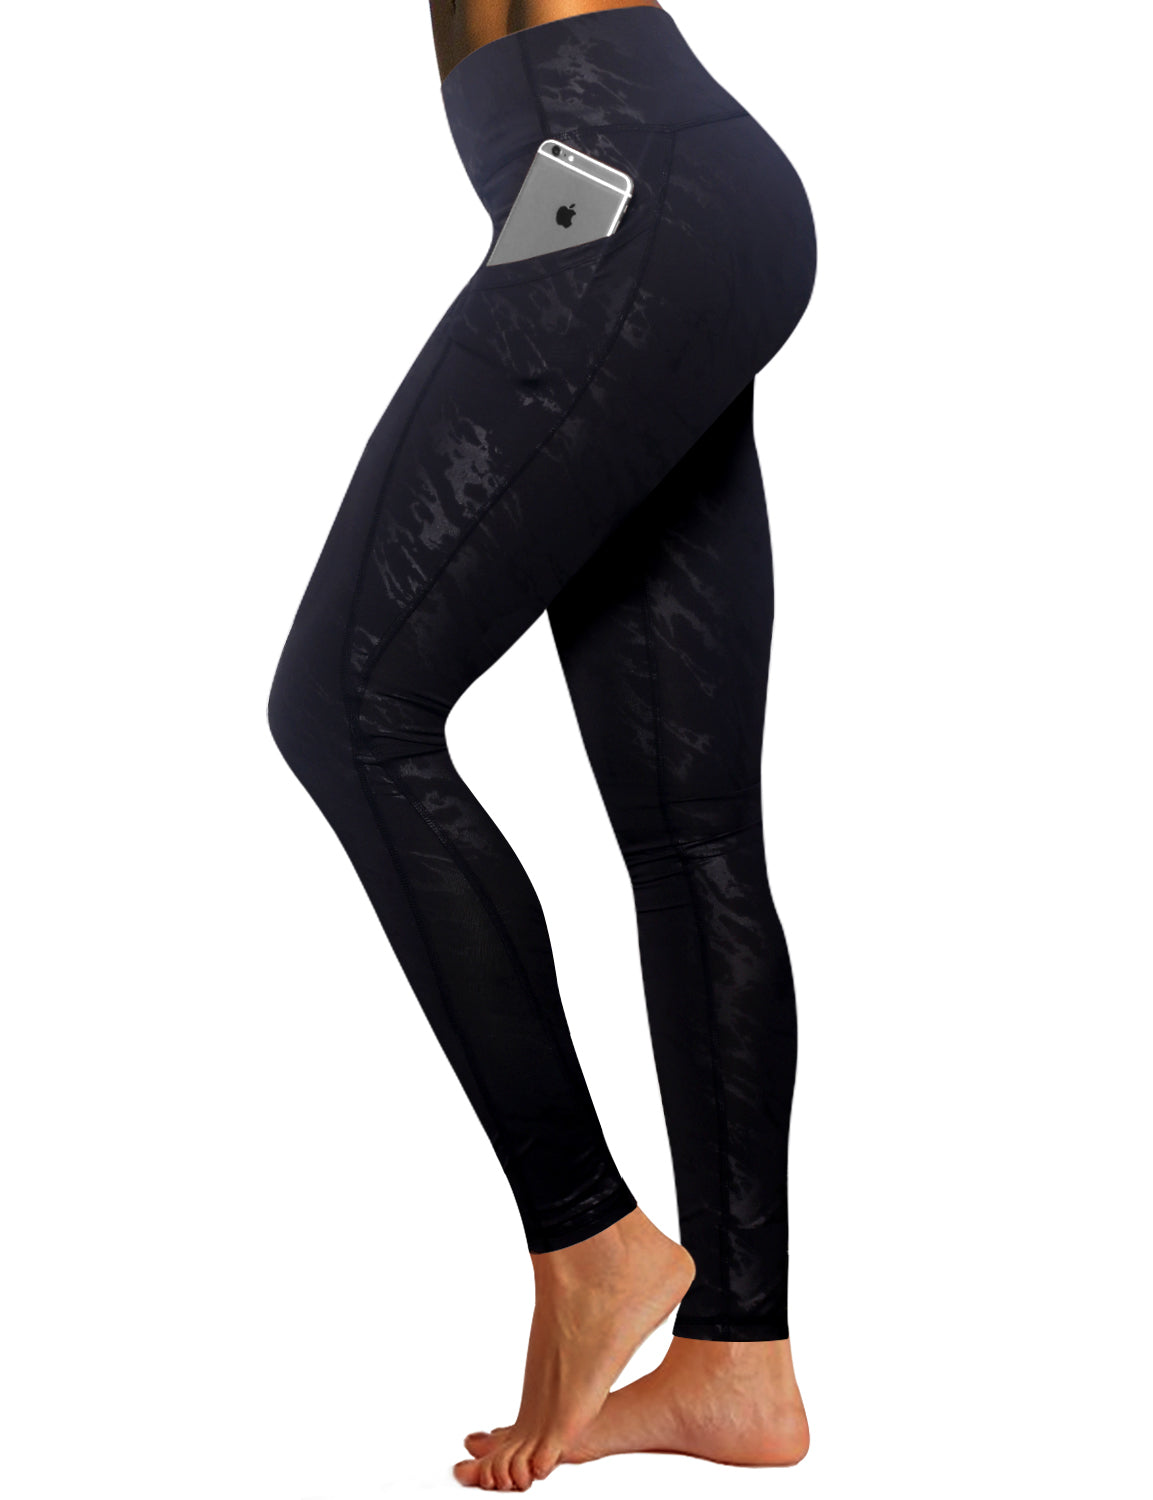 26" inseam 3D Printed Jogging Pants PAINT